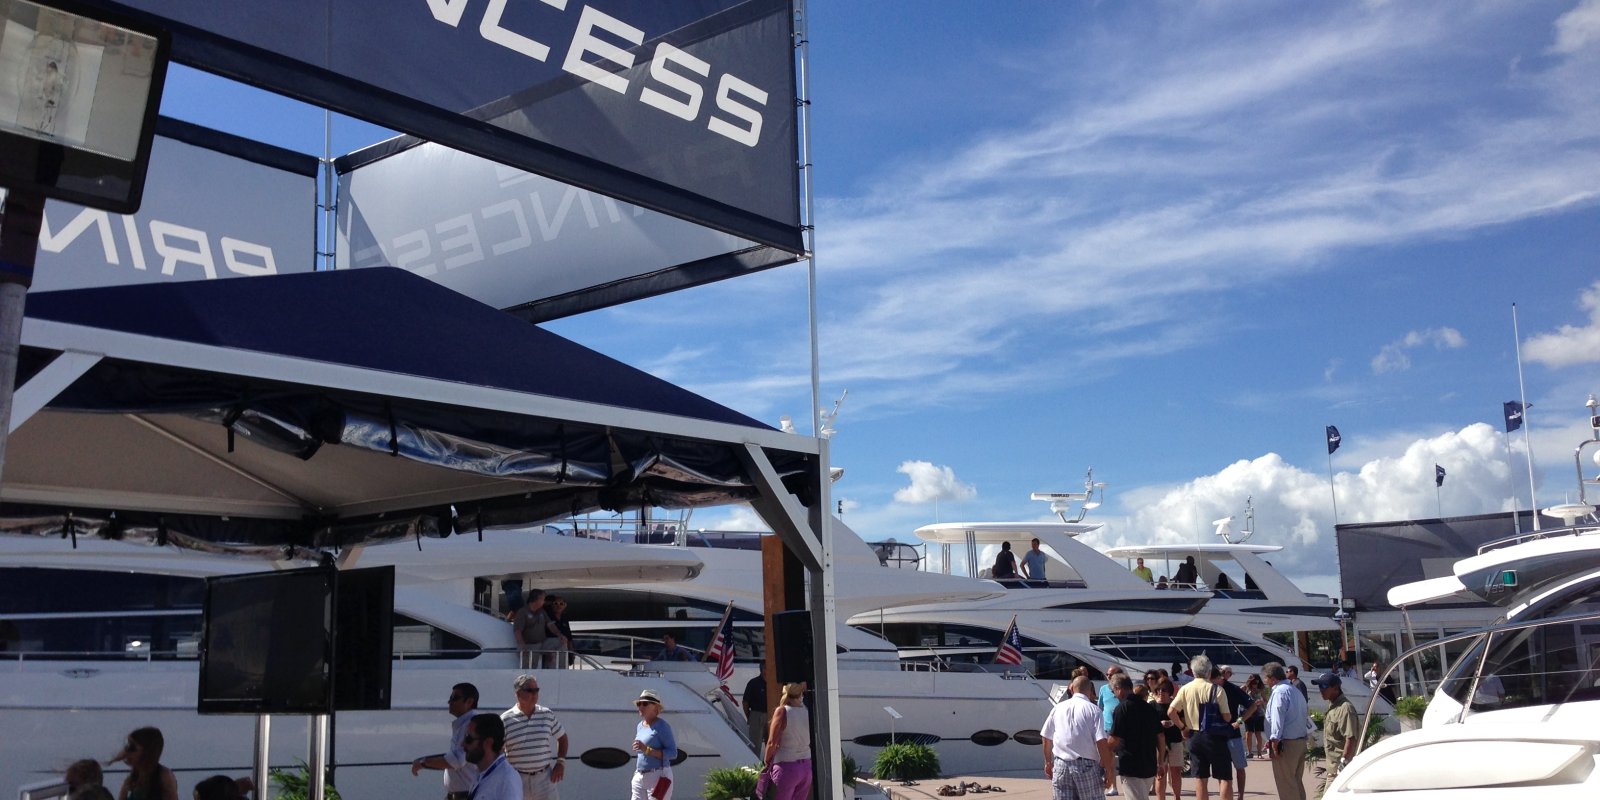 Fort Lauderdale Boat Show October 25-29